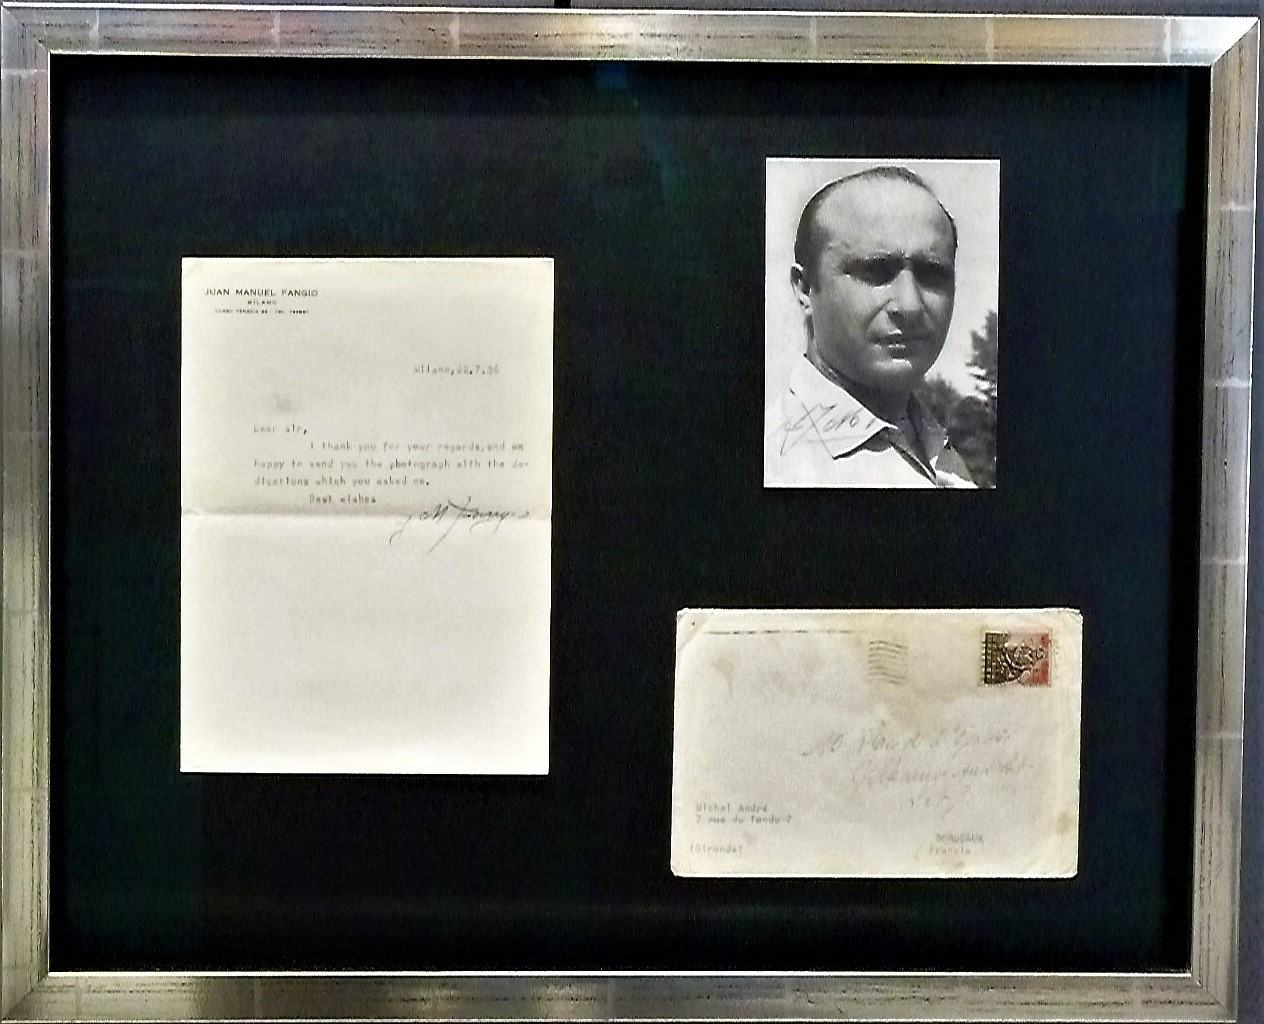 STICKER PEGATINA DECAL VINYL Juan Manuel Fangio Signature 